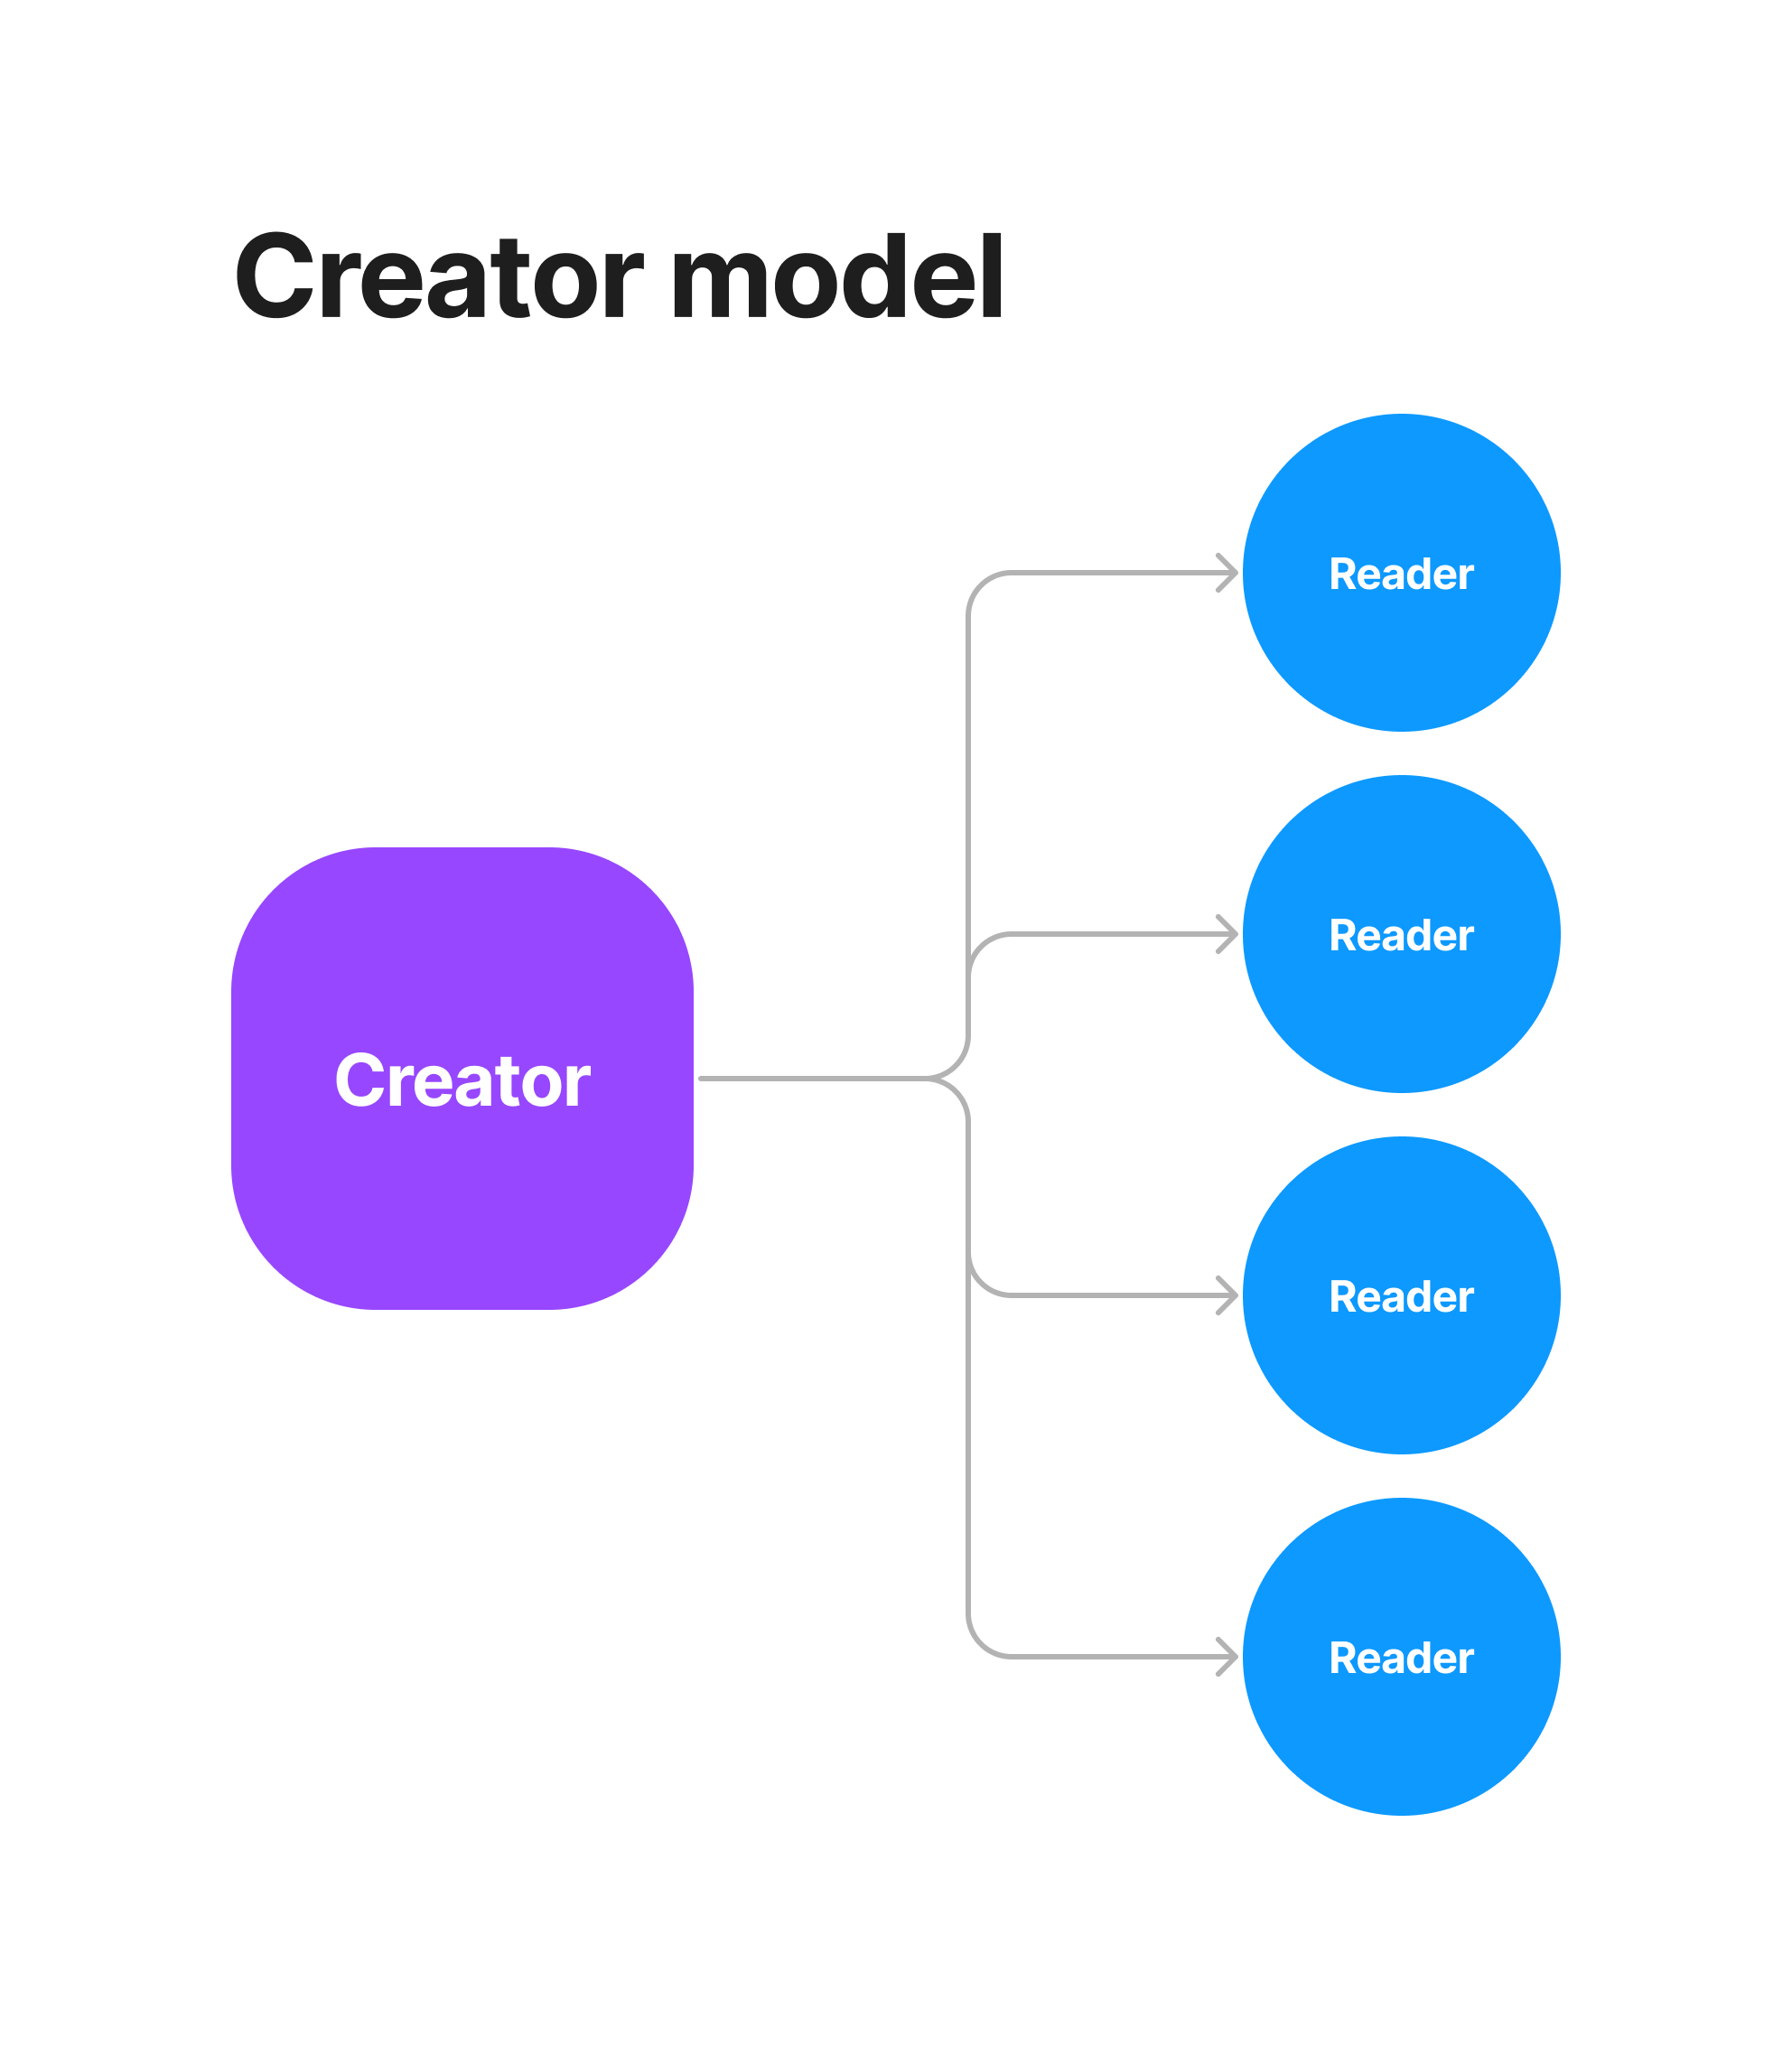 Creator media model: A creator broadcasts to readers